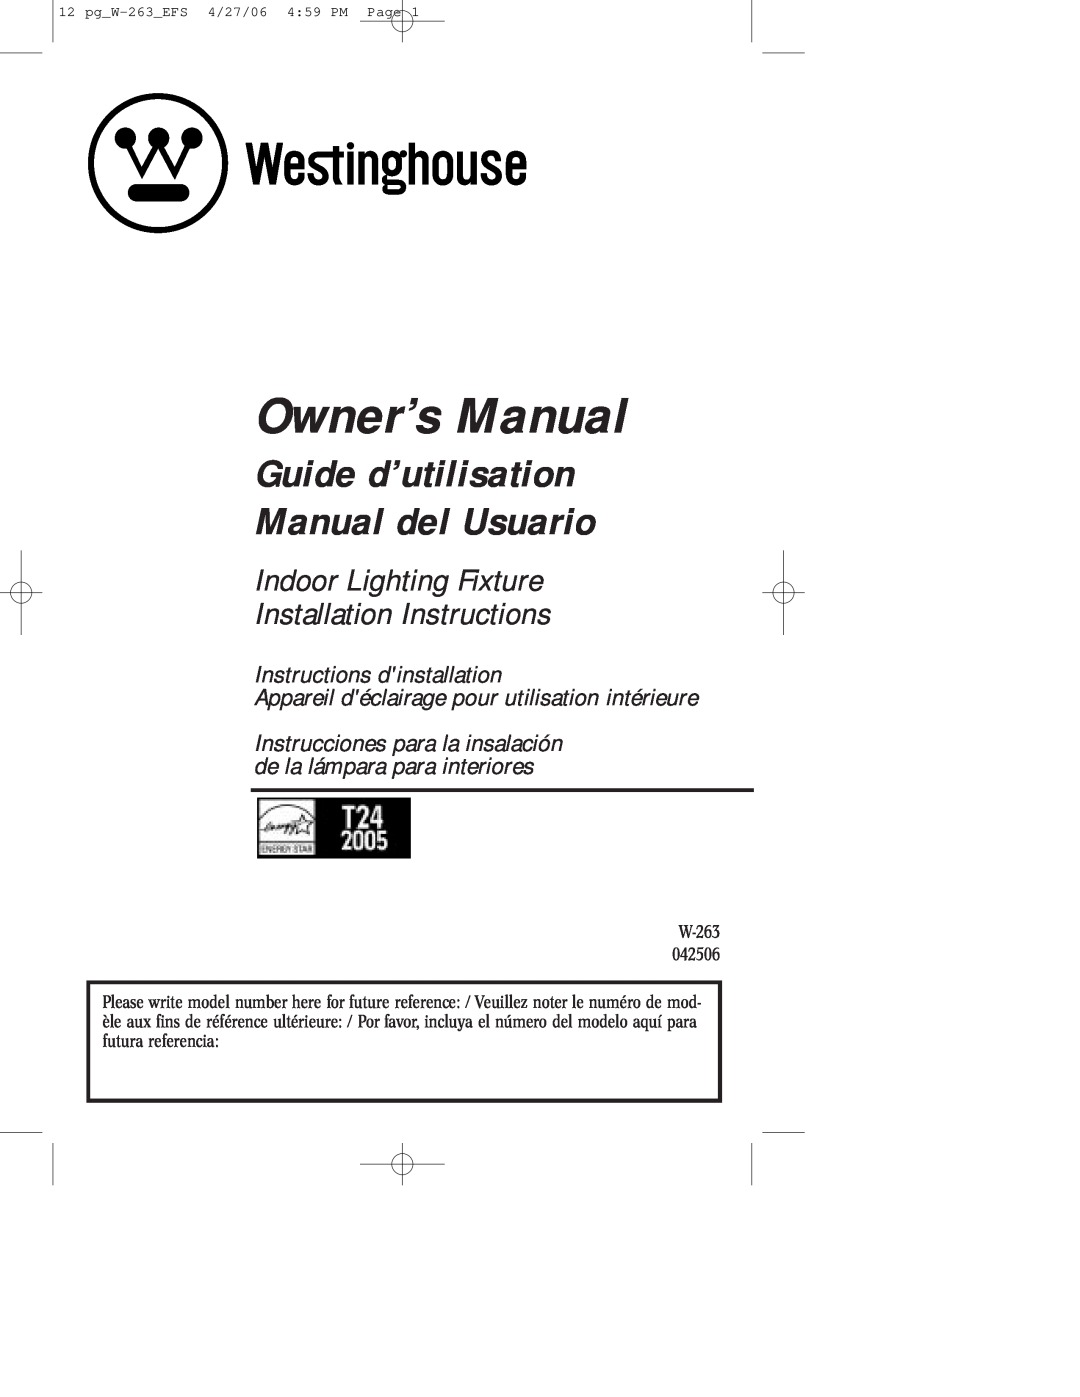 Westinghouse Indoor Lighting fixture owner manual Guide d’utilisation Manual del Usuario, Instructions dinstallation 